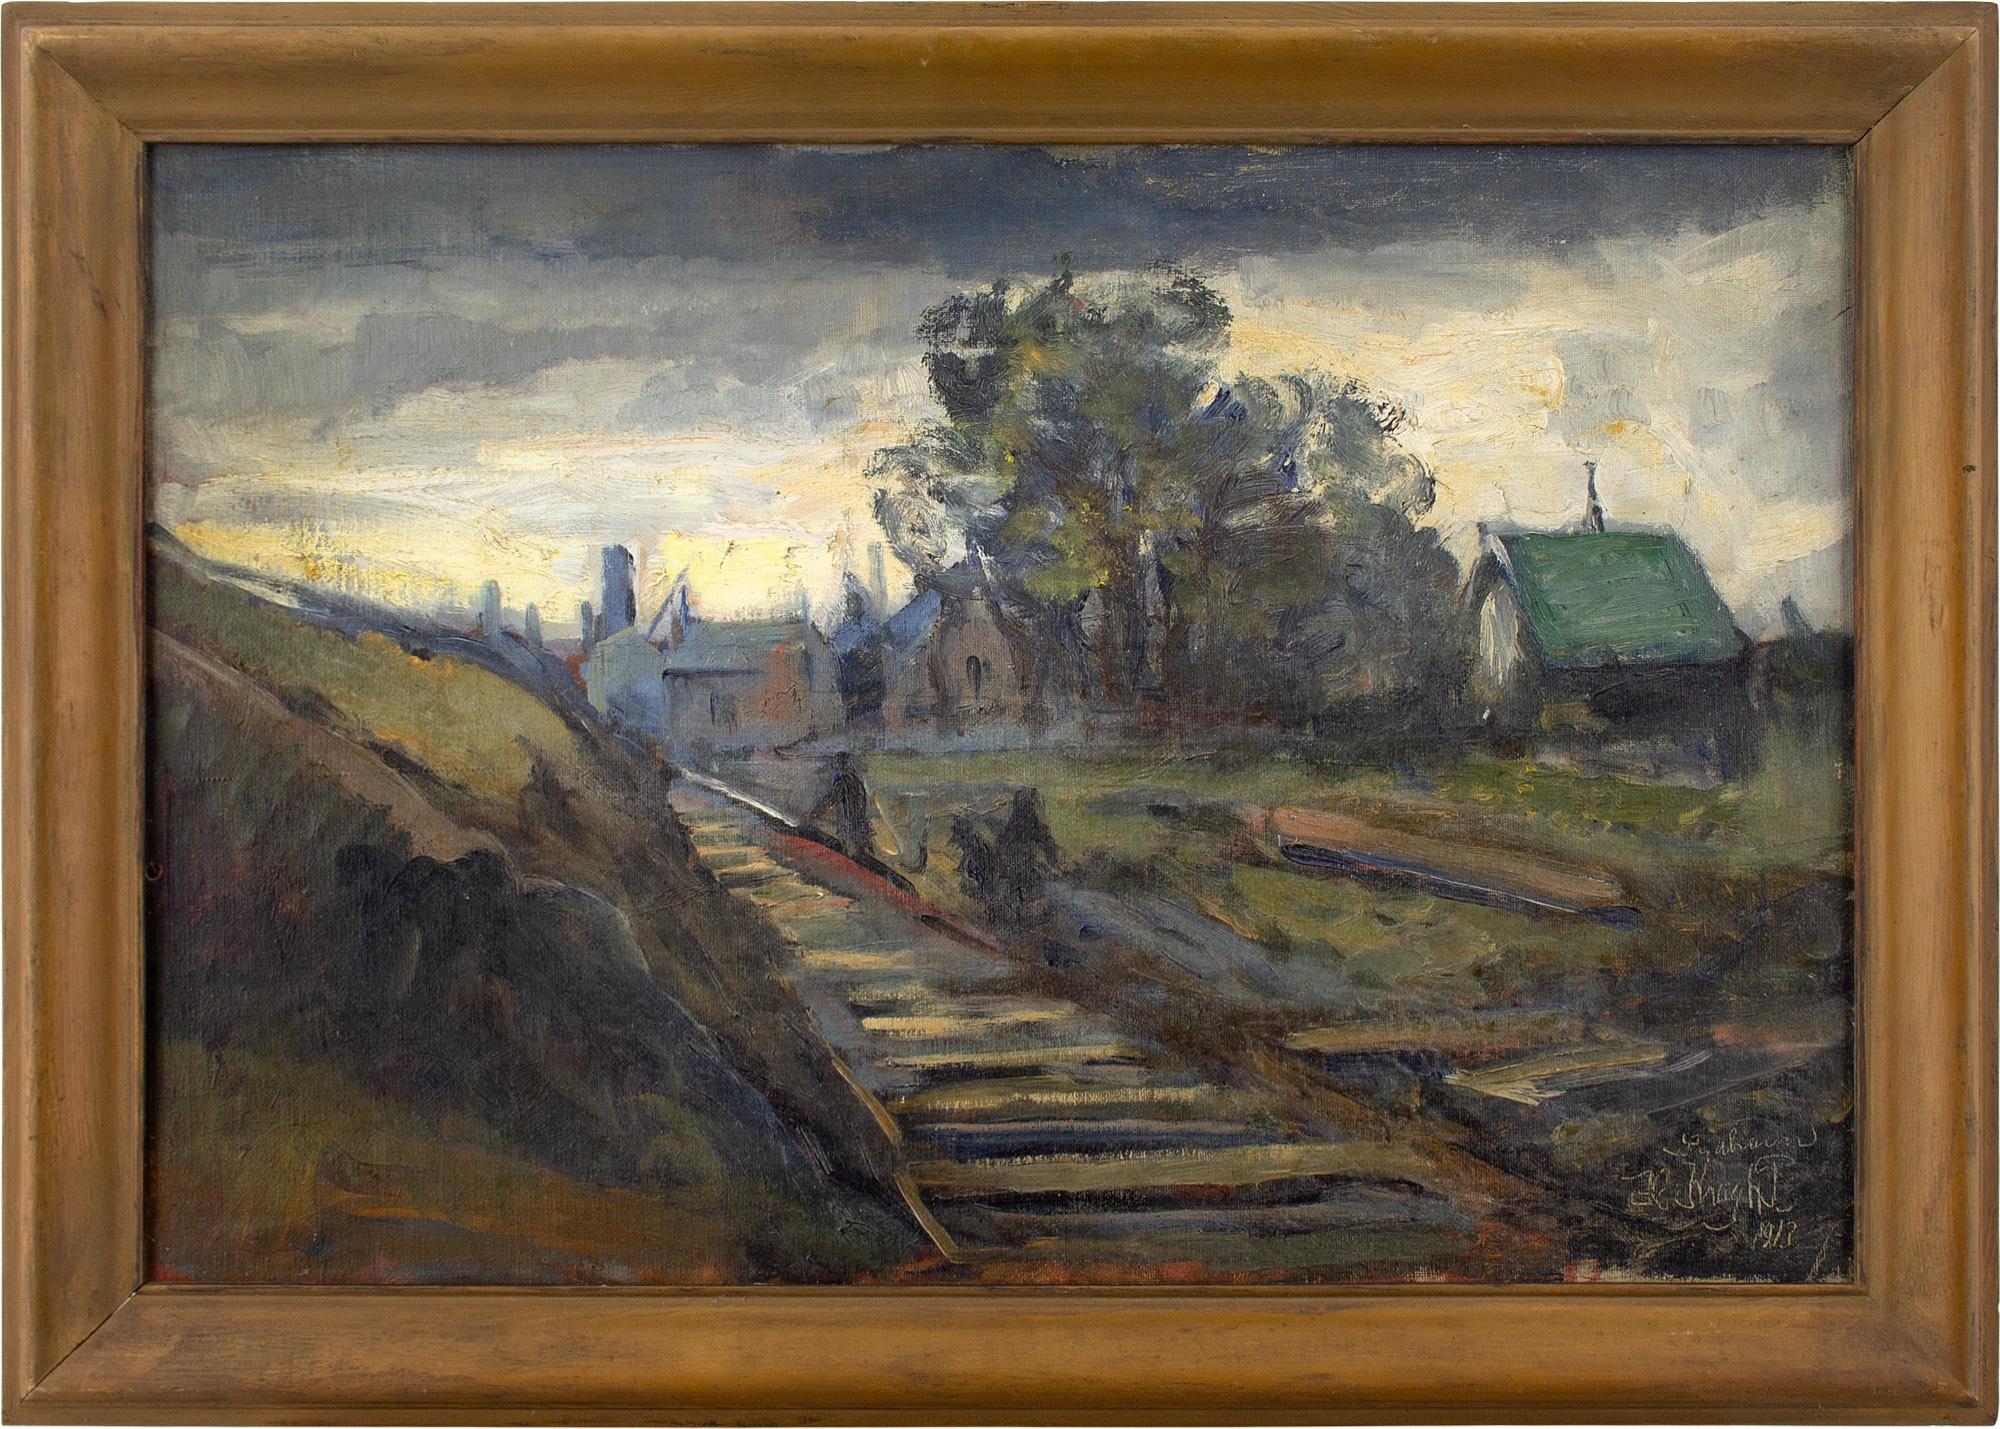 Hjalmar Kragh-Pedersen, Sydhavn, peinture à l'huile